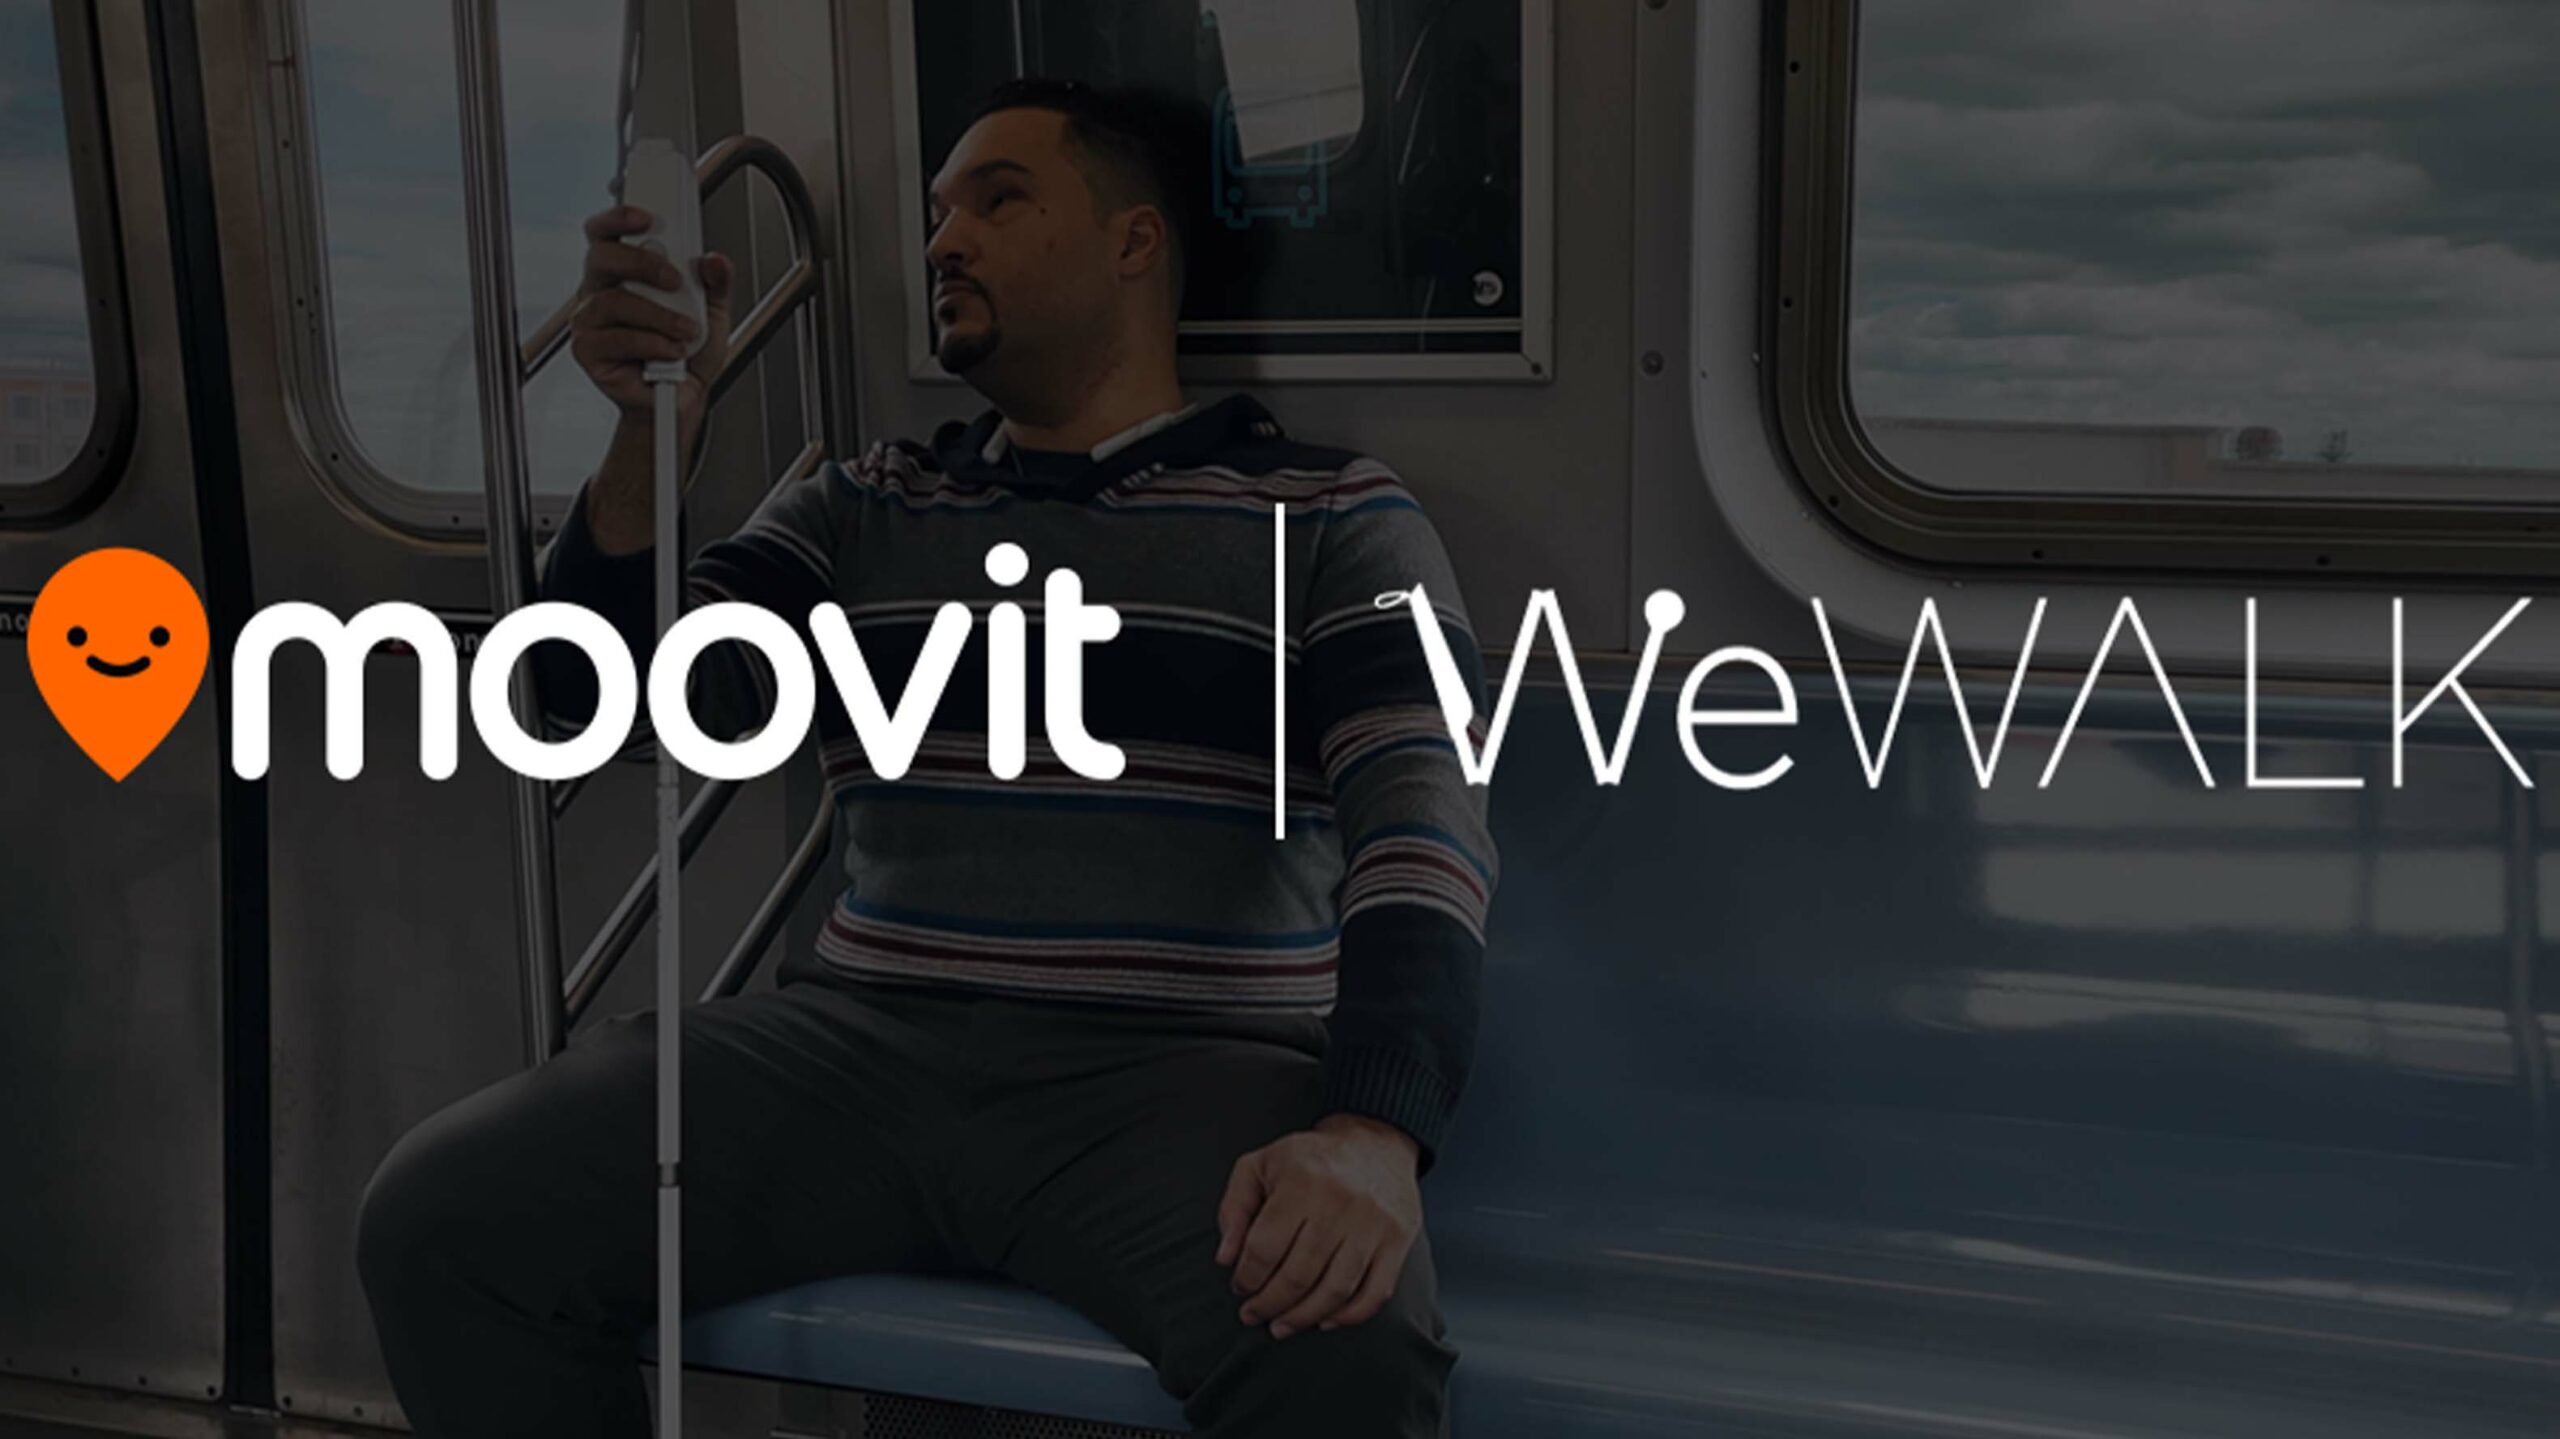 Moovit and WeWalk logos